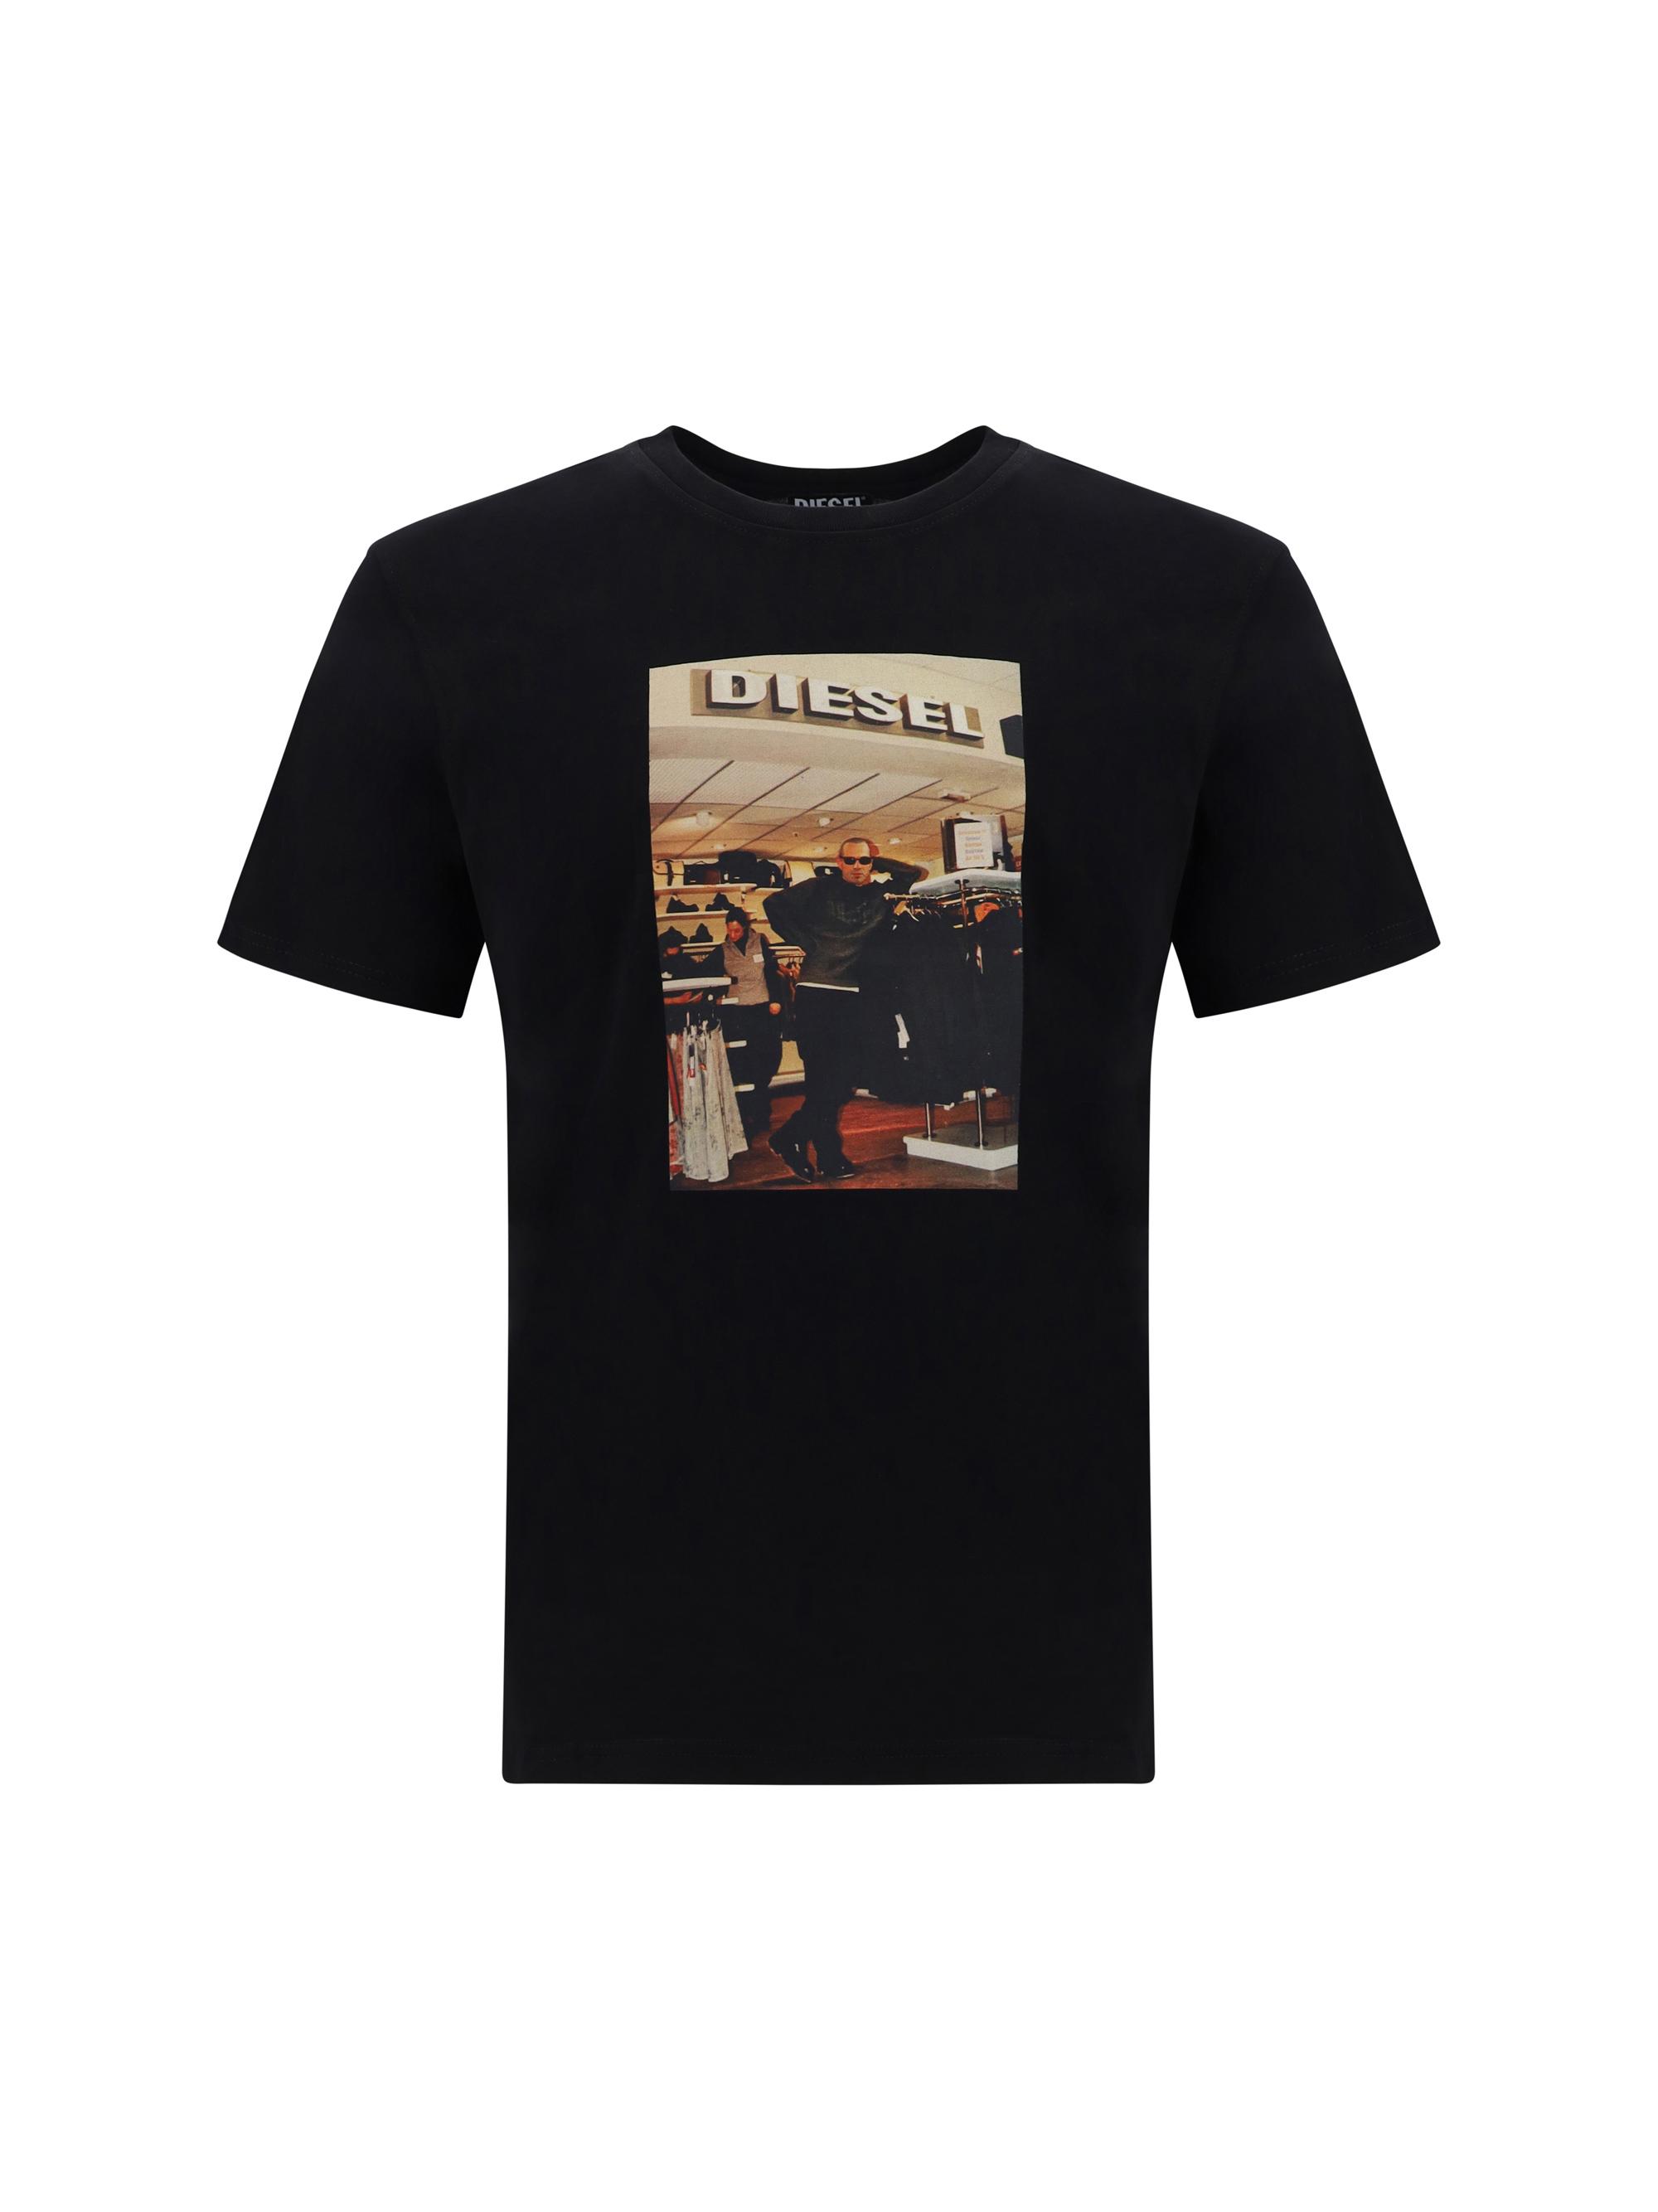 DIESEL T-shirt in Black for Men | Lyst